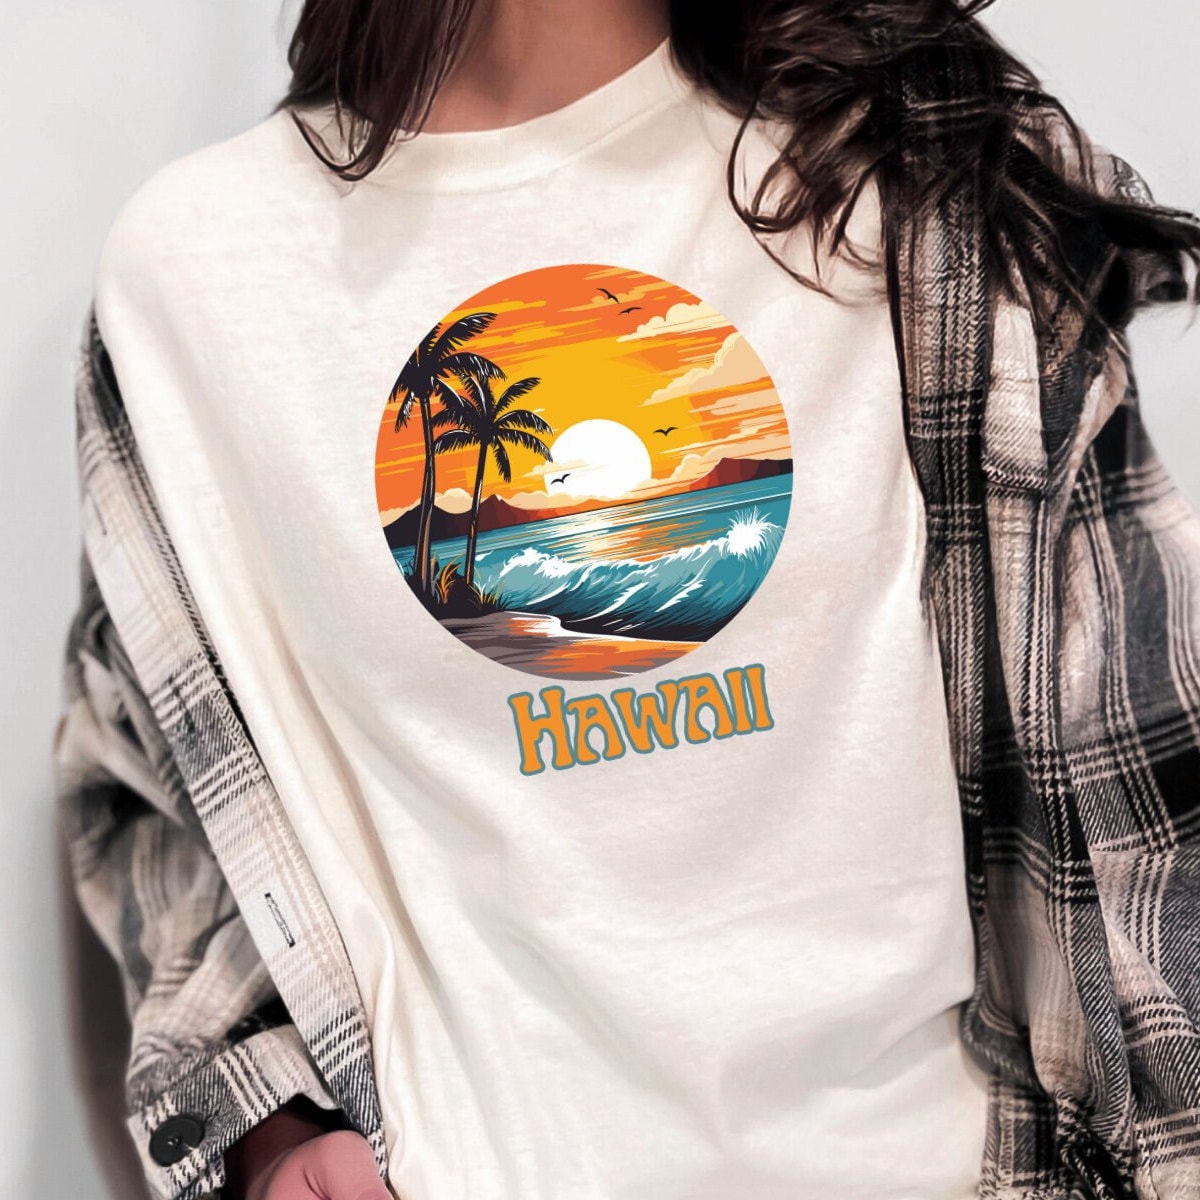 Hawaii Sunset Mountain Beach Tee, Aloha Shirt, Summer Tee, Hawaii Family Vacation Shirts, Spring Shirts, Hawaii T-Shirt, Hawaii Trip Tee